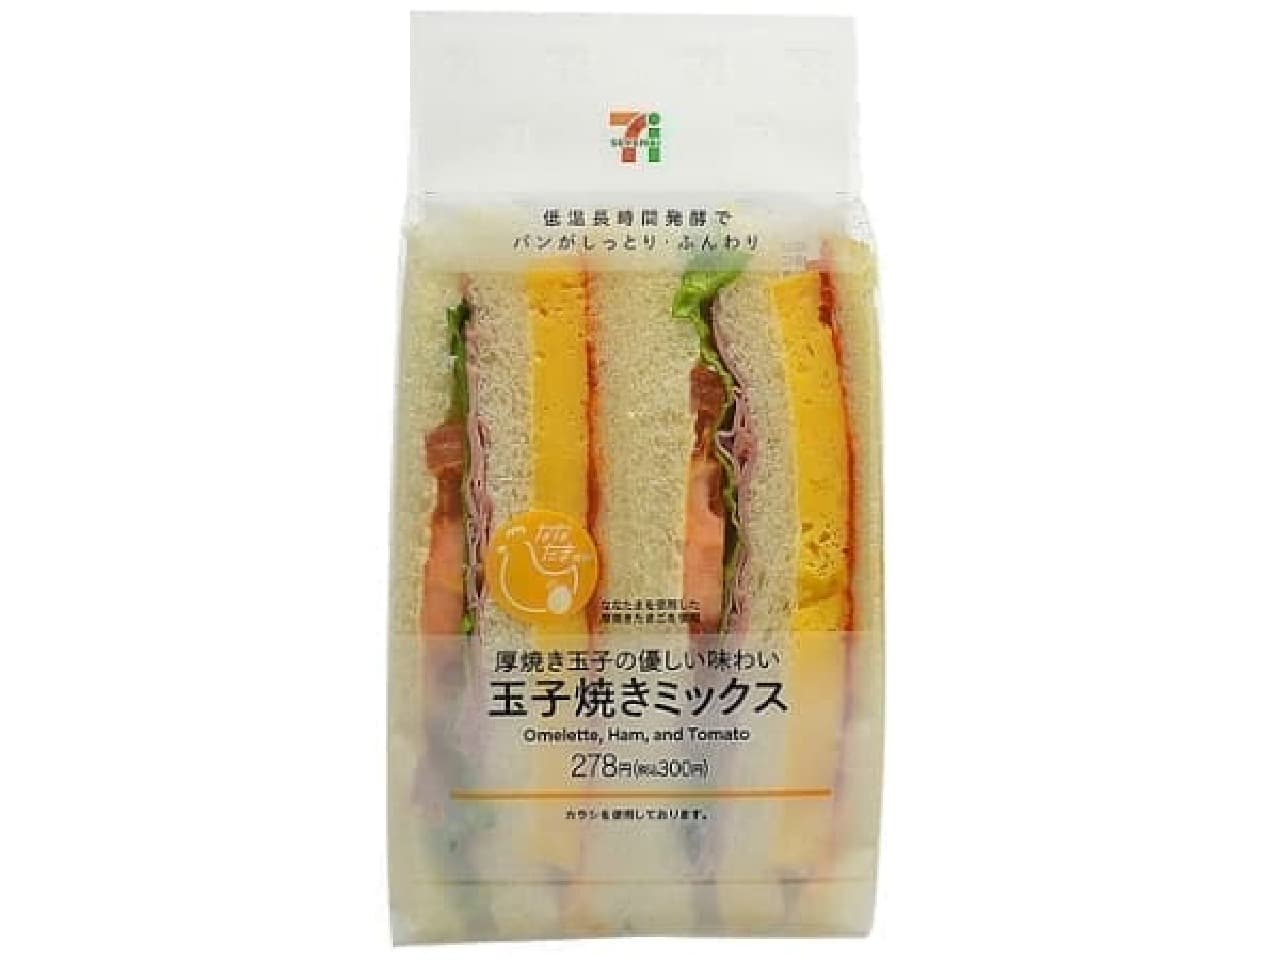 7-ELEVEN "Tamagoyaki mixed sandwich using Nanatama"